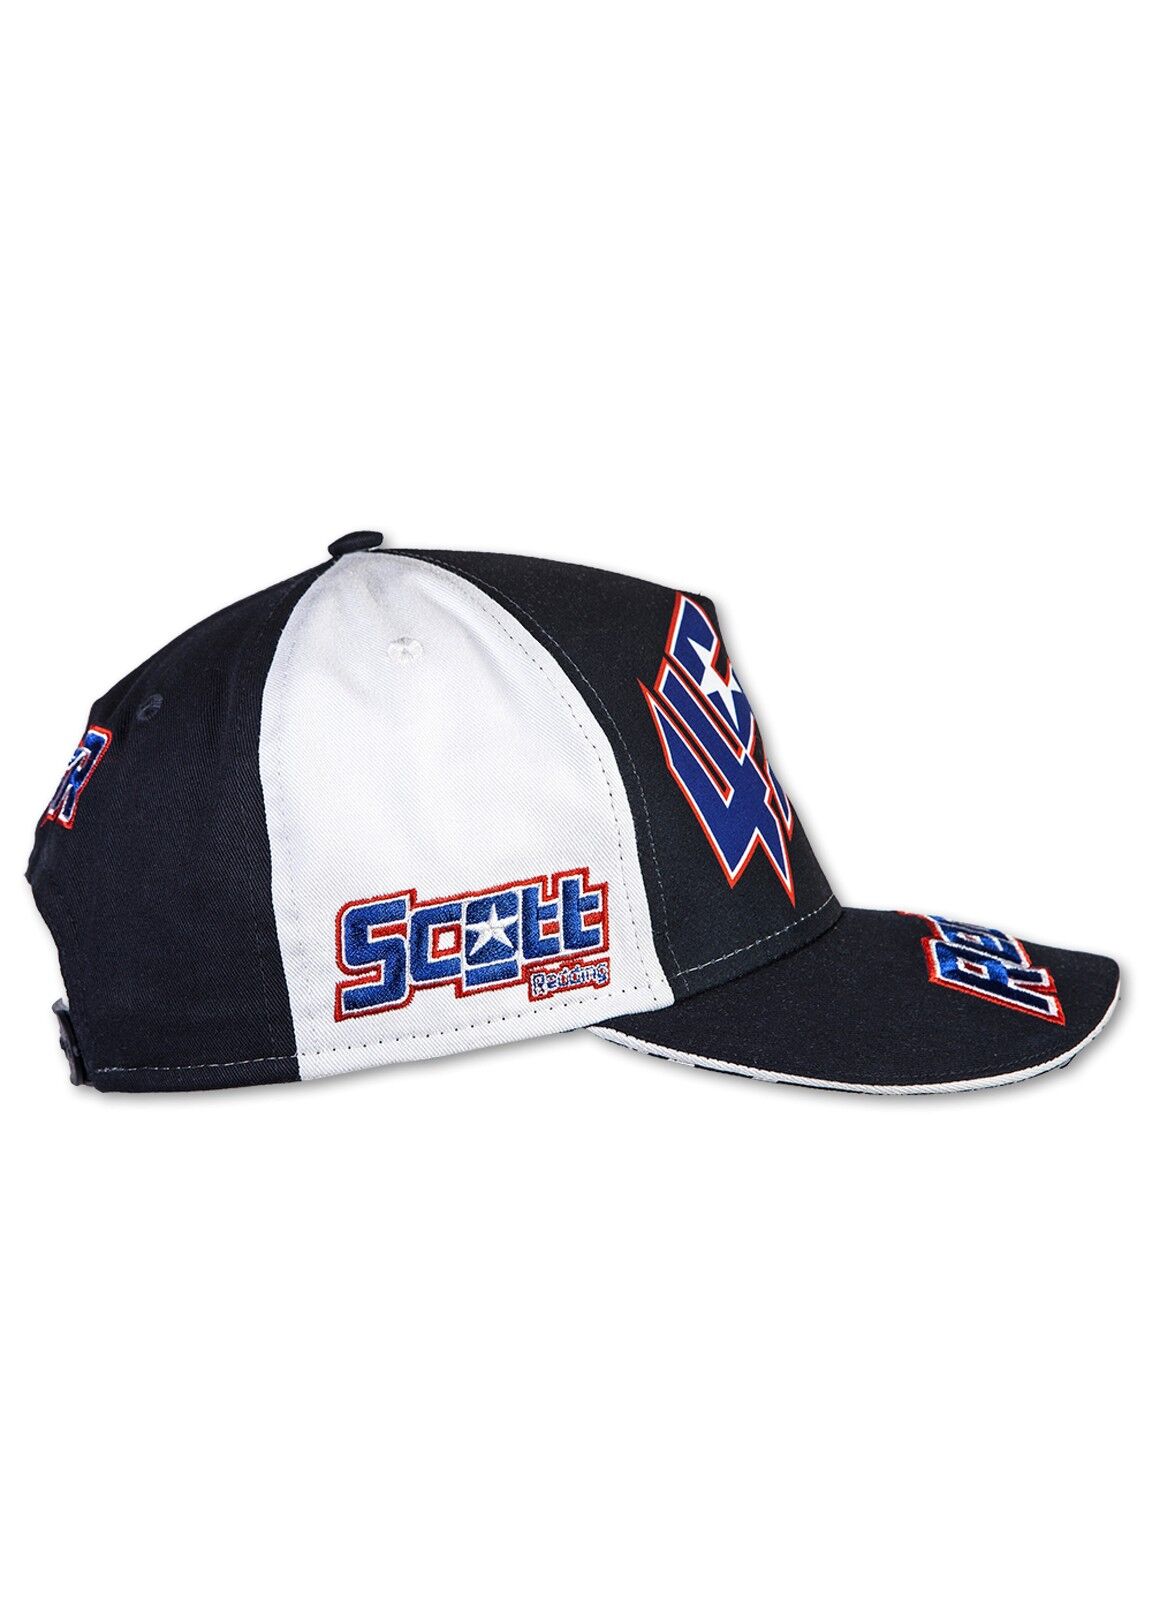 New Official Scott Redding Adjustable Baseball Cap - Srmca 125002